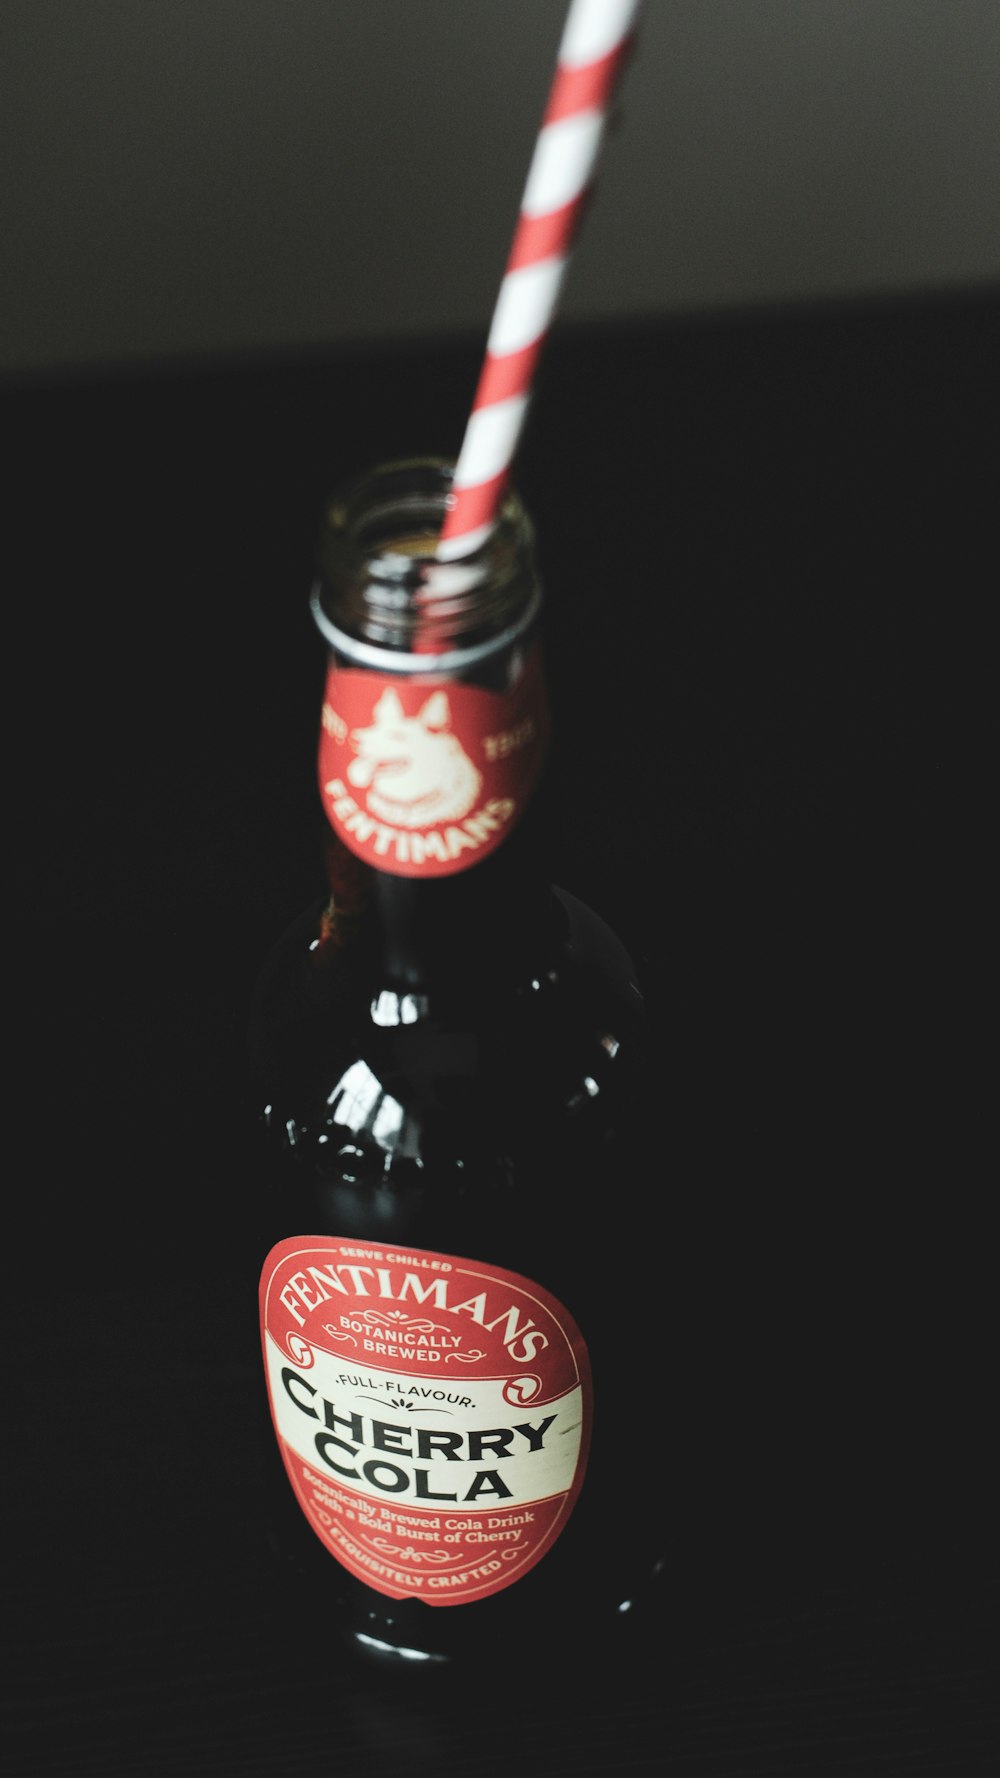 Fentiman's cherry cola bottle with straw